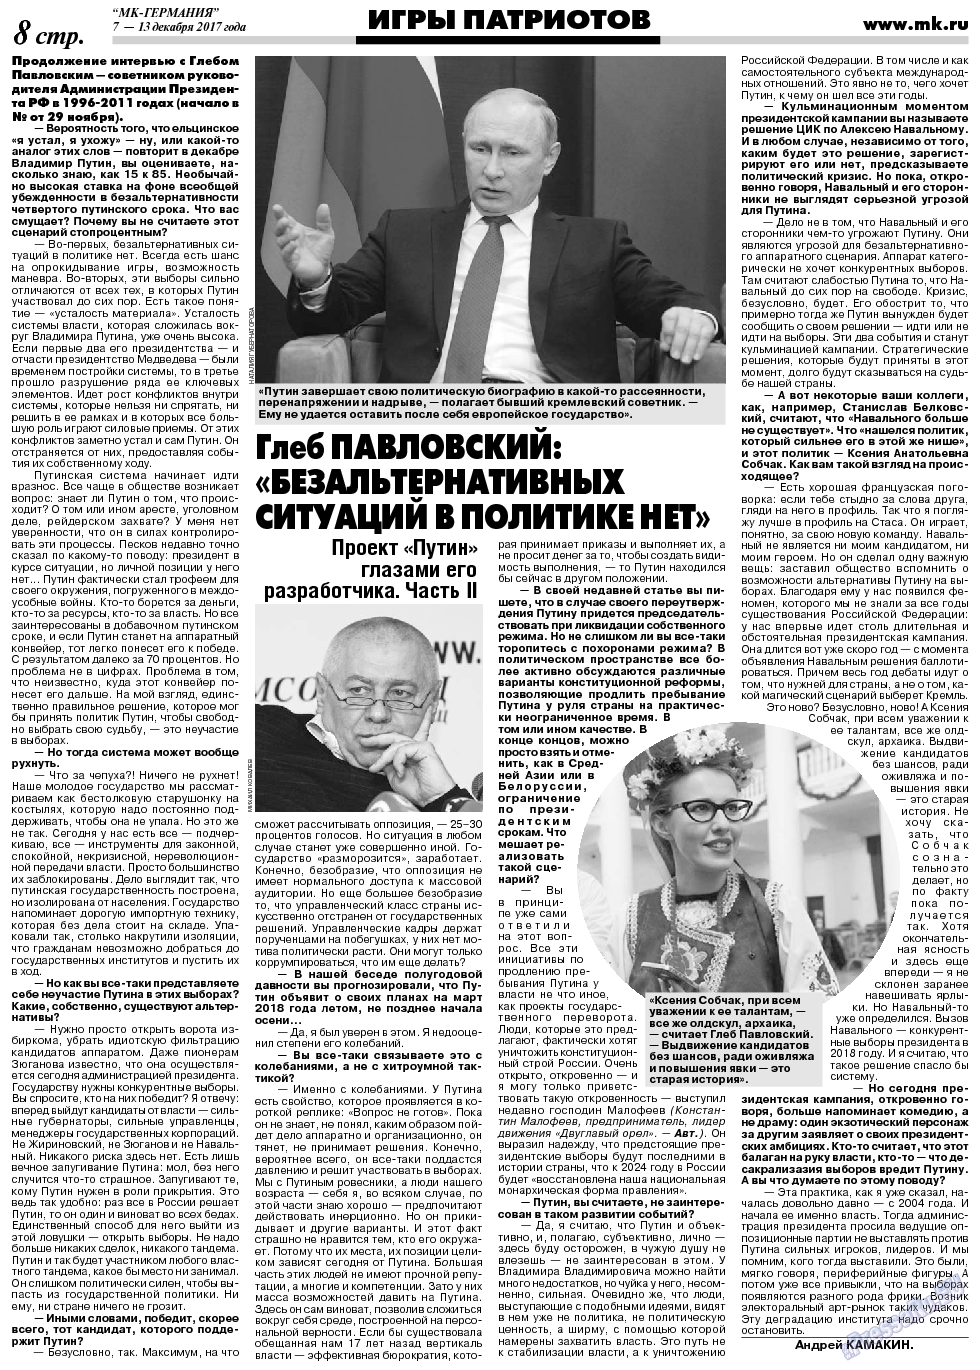 МК-Германия, газета. 2017 №50 стр.8